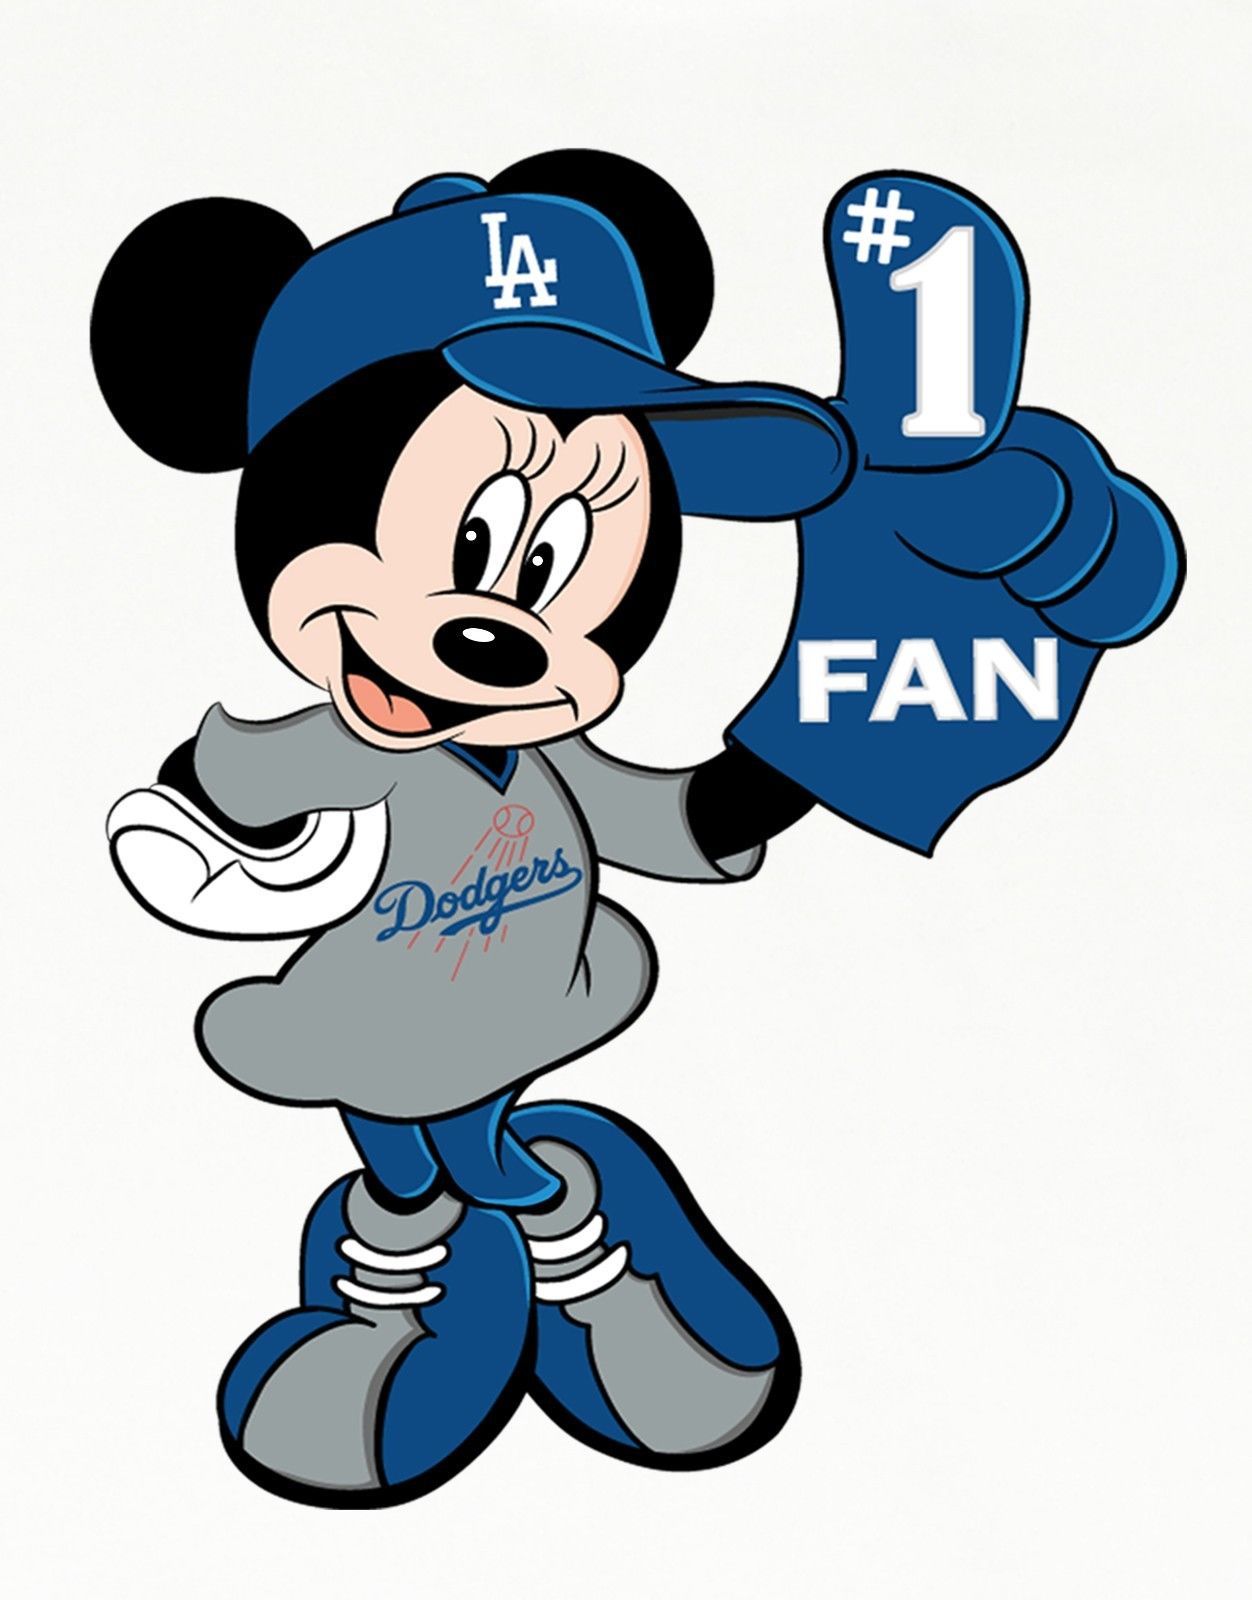 LA Dodgers Minnie Mouse #1 FAN Image Ladies/Women's Scallop Bottom Tank Tops